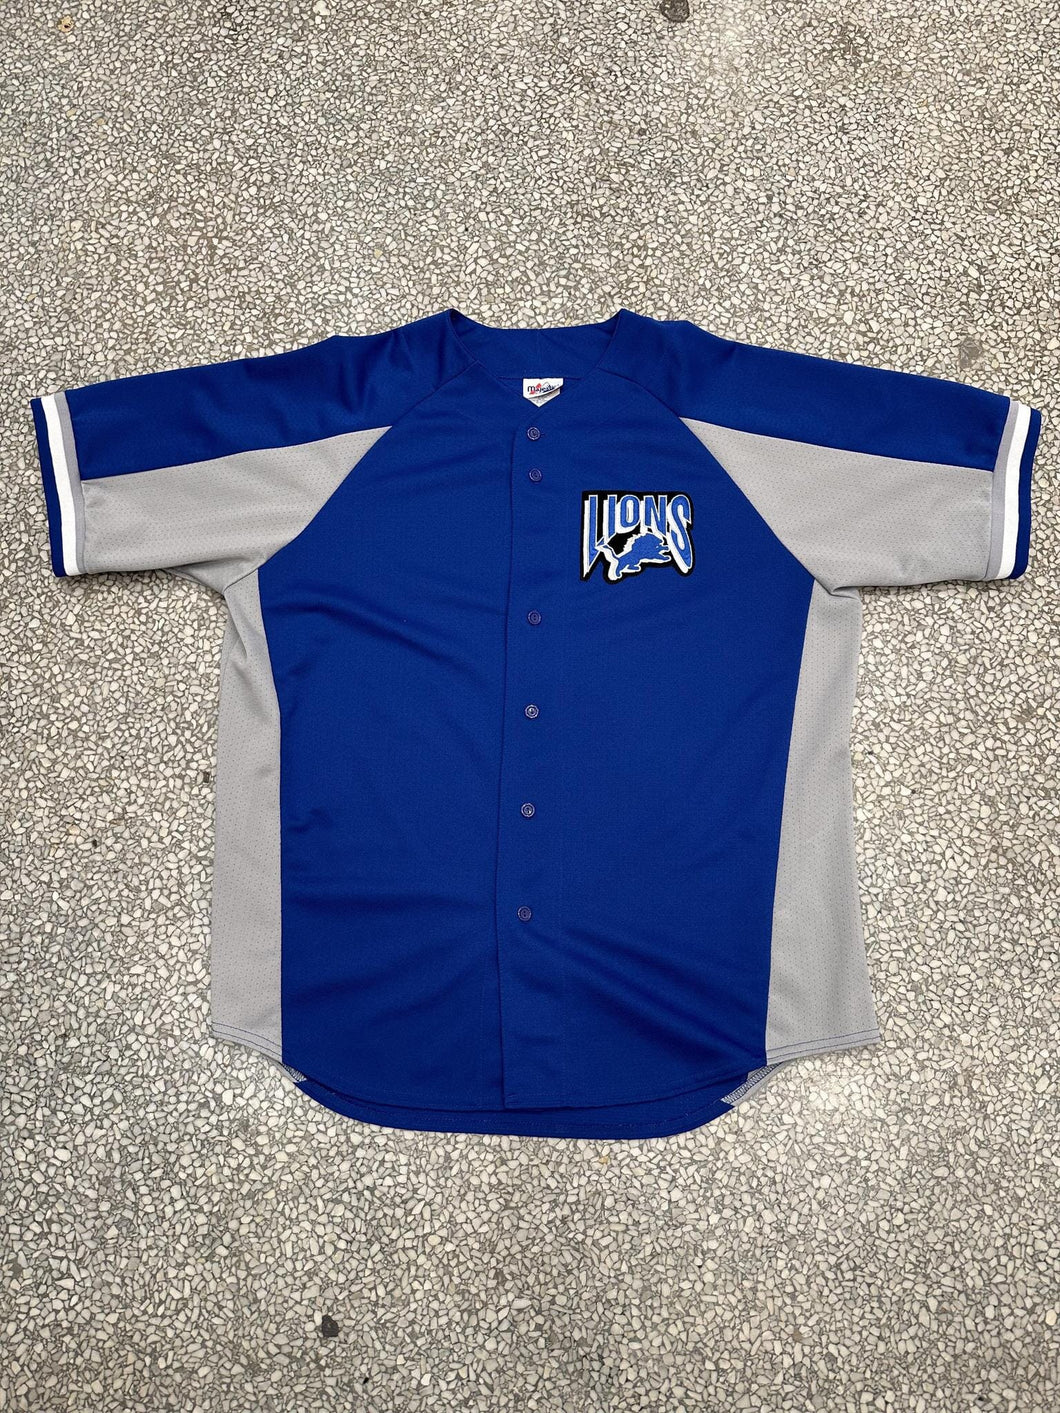 Detroit Lions Vintage 90s Majestic Baseball Jersey Blue Grey ABC Vintage 